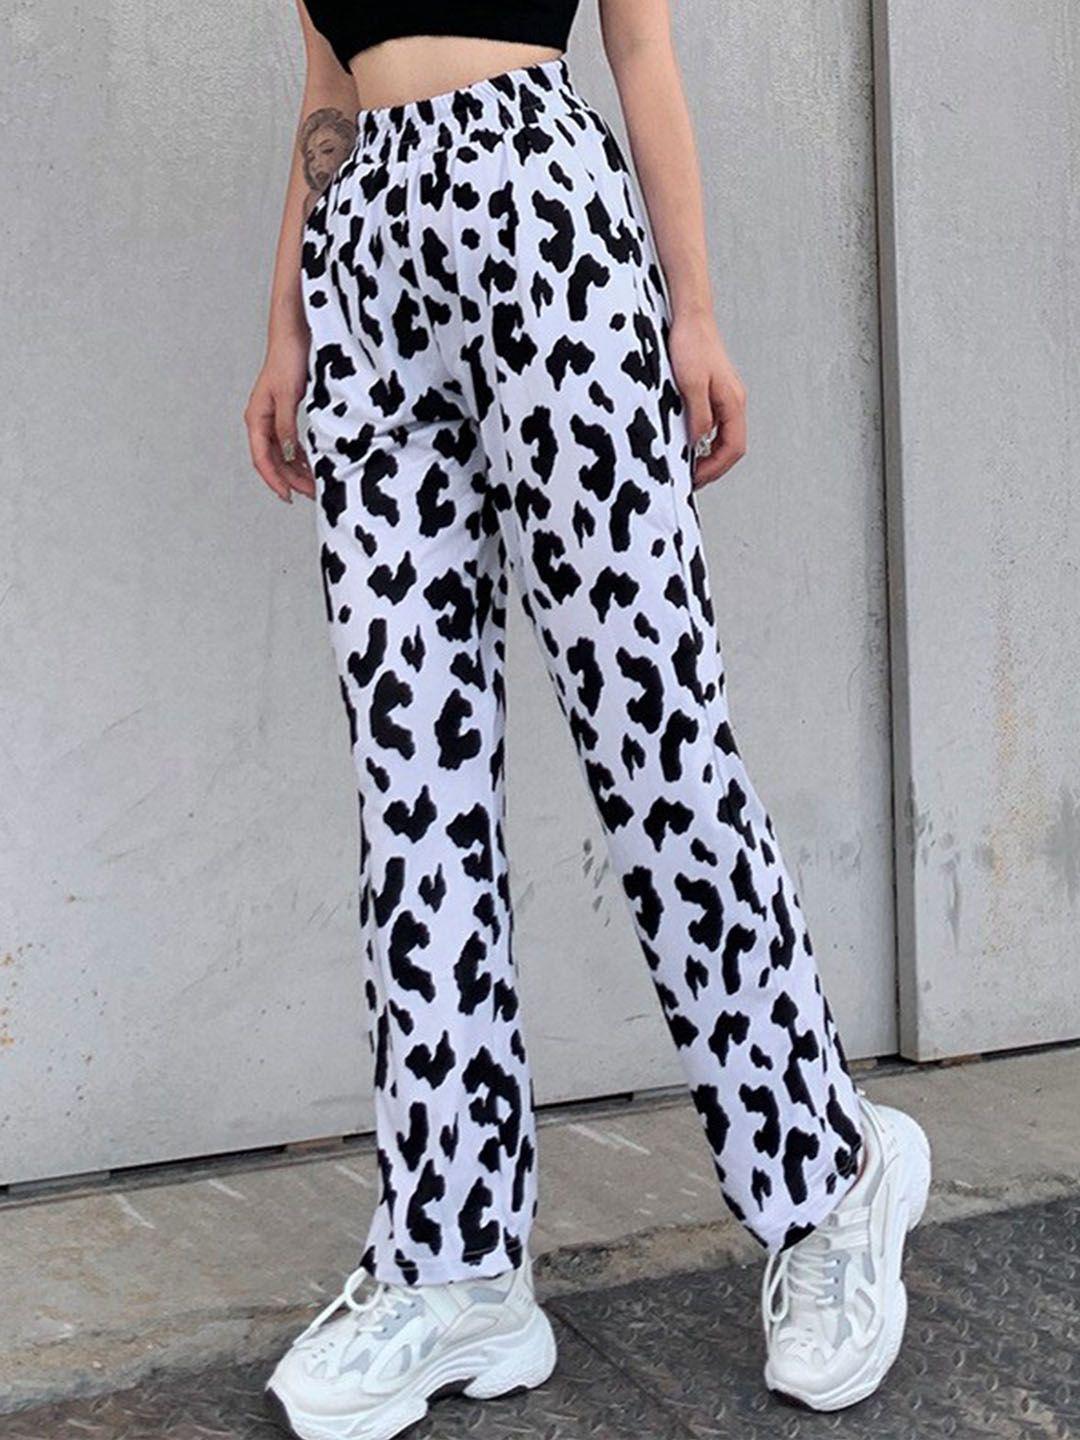 stylecast x kpop women black animal printed original trousers